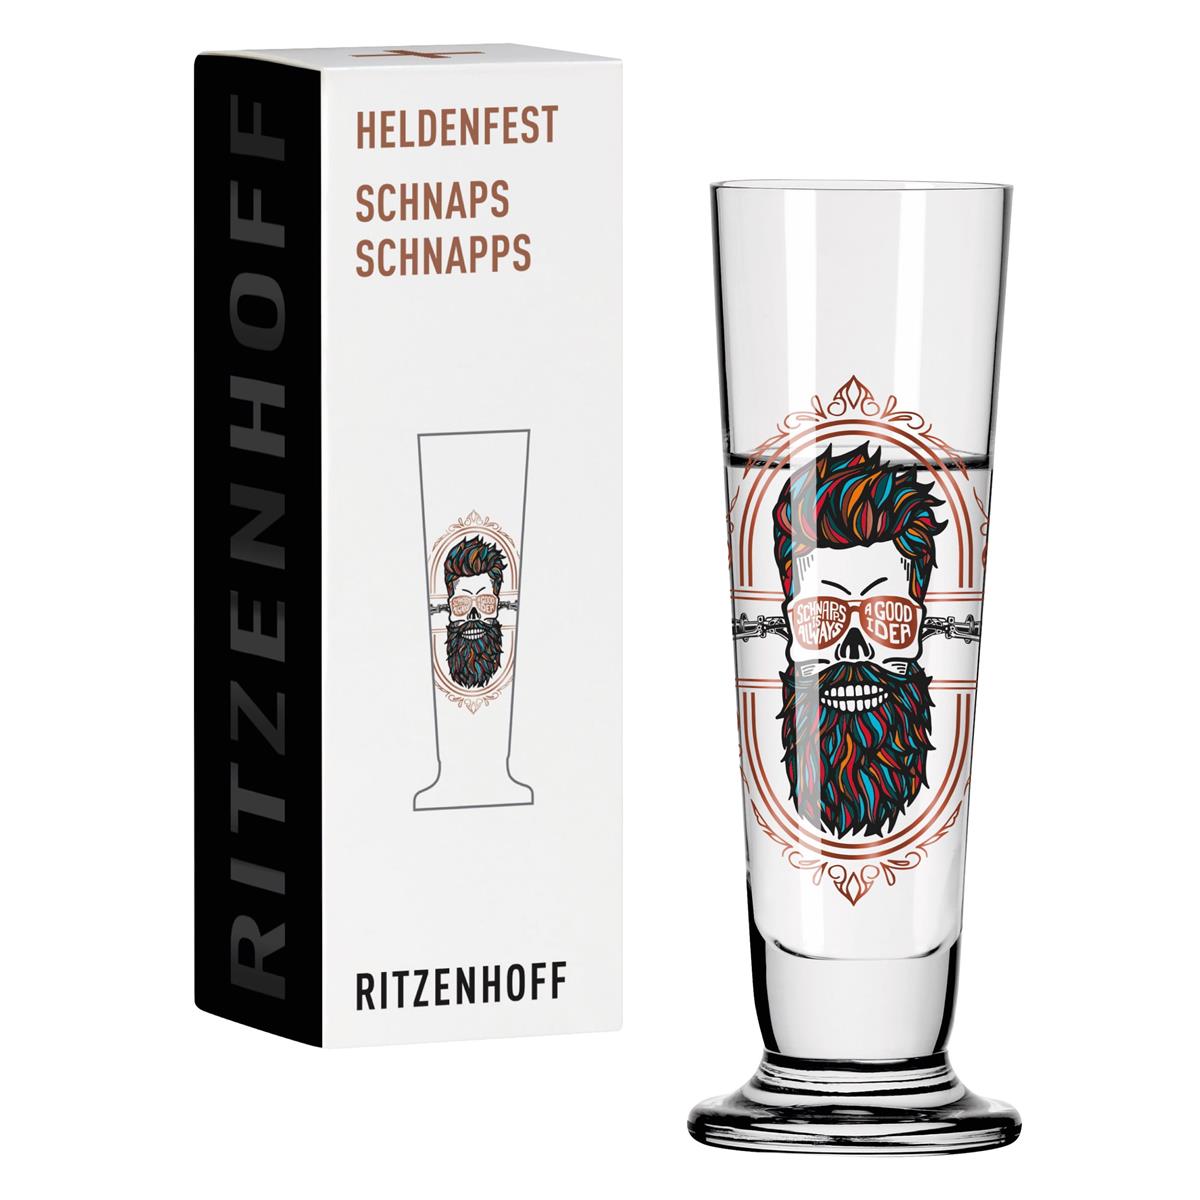 Ritzenhoff Schnapsglas Heldenfest Schnaps 004